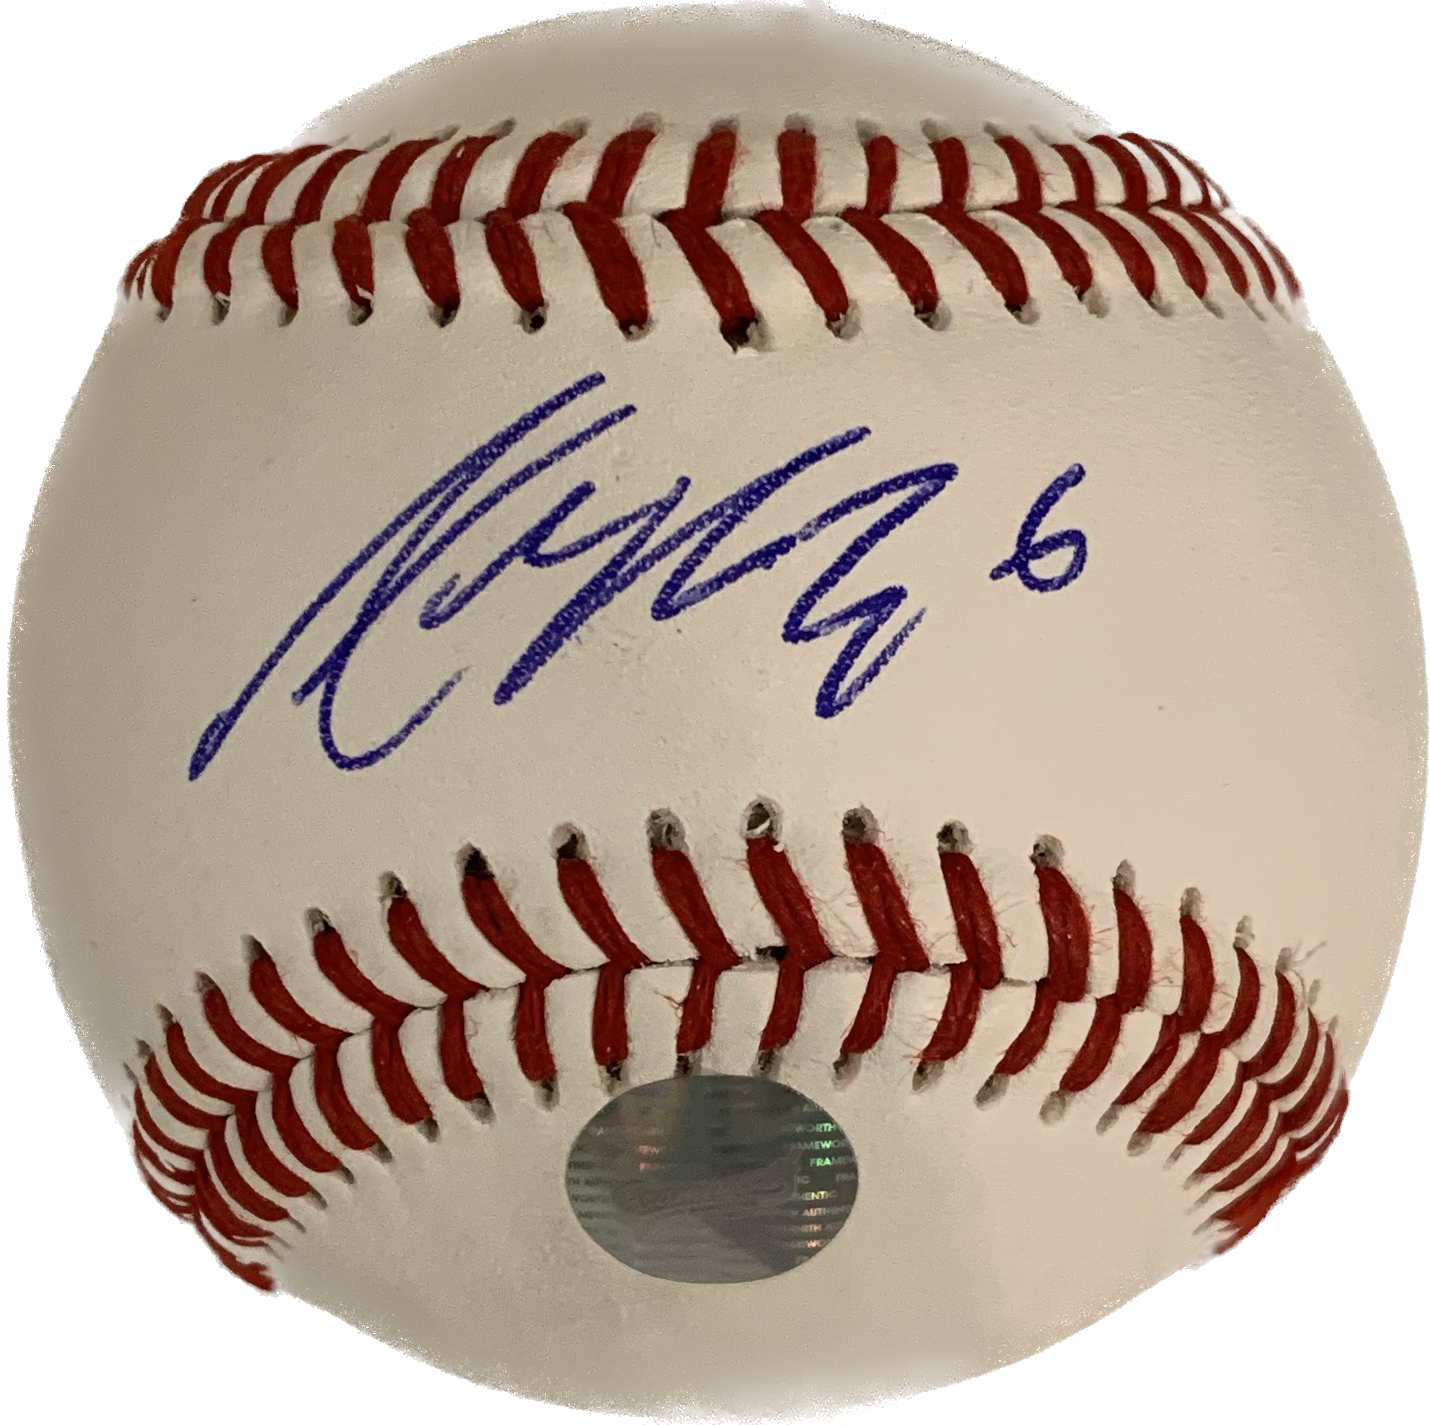 Alek Manoah 2022 Major League Baseball All-Star Game Autographed Jersey